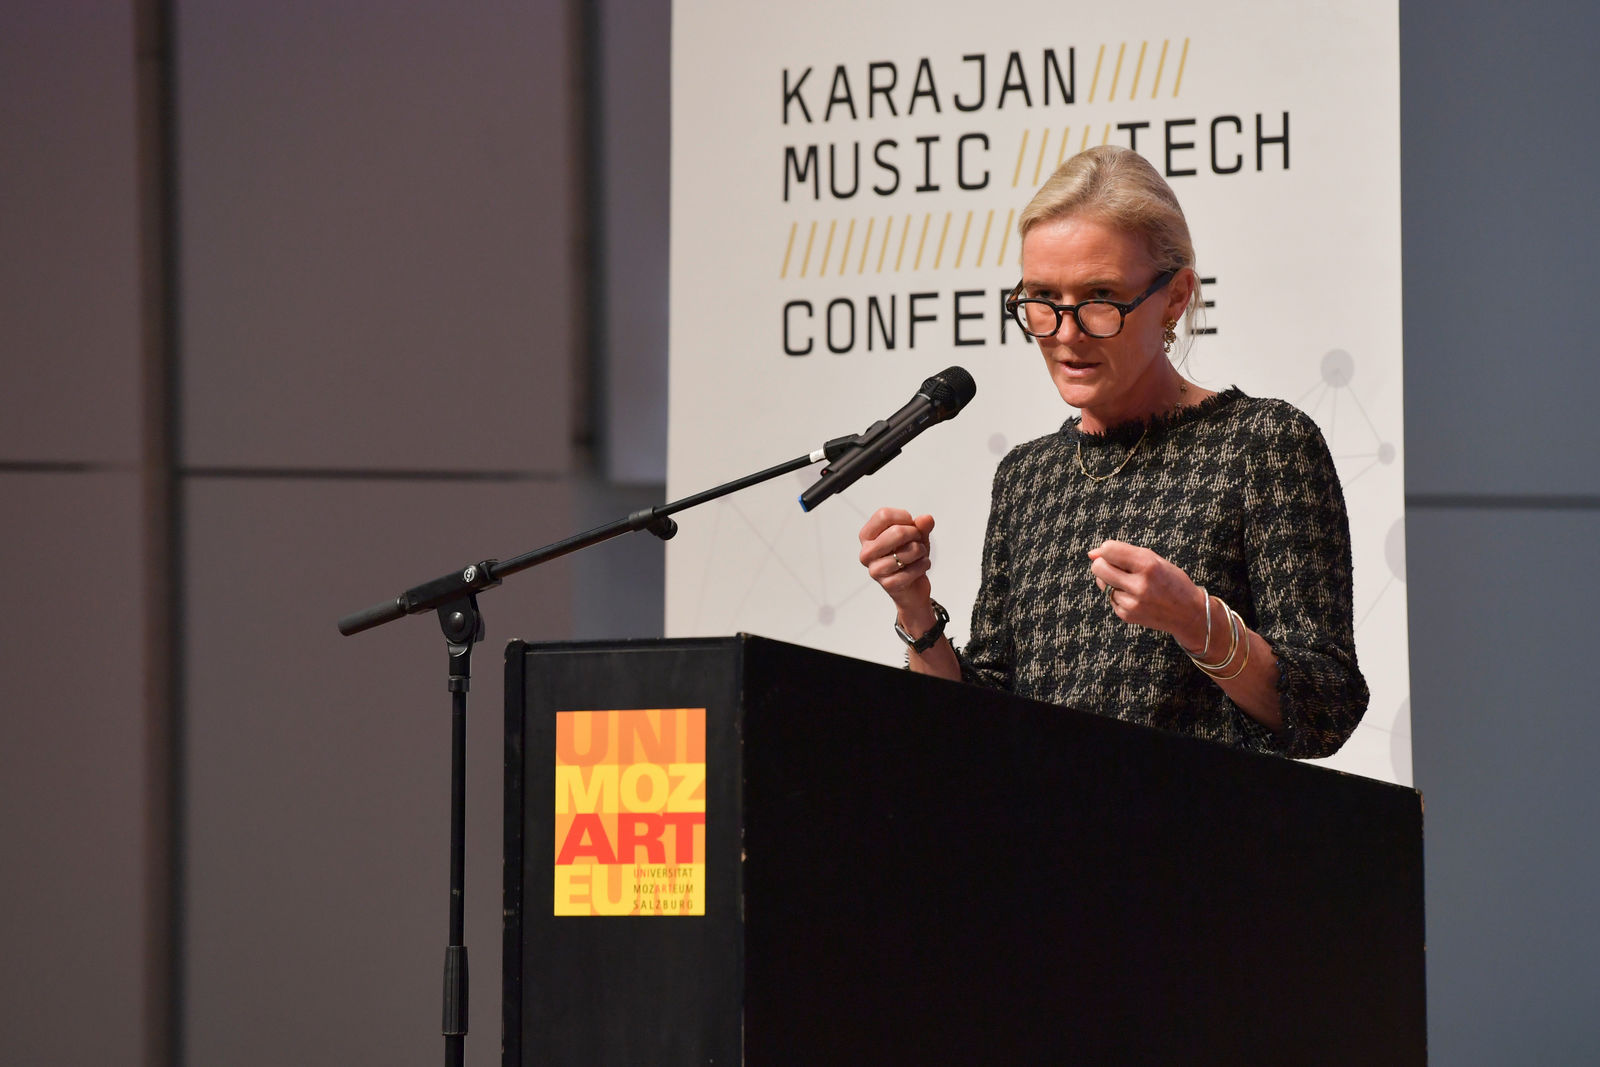 Volkswagen and Karajan Music Tech Conference unveil deconstructed trumpet